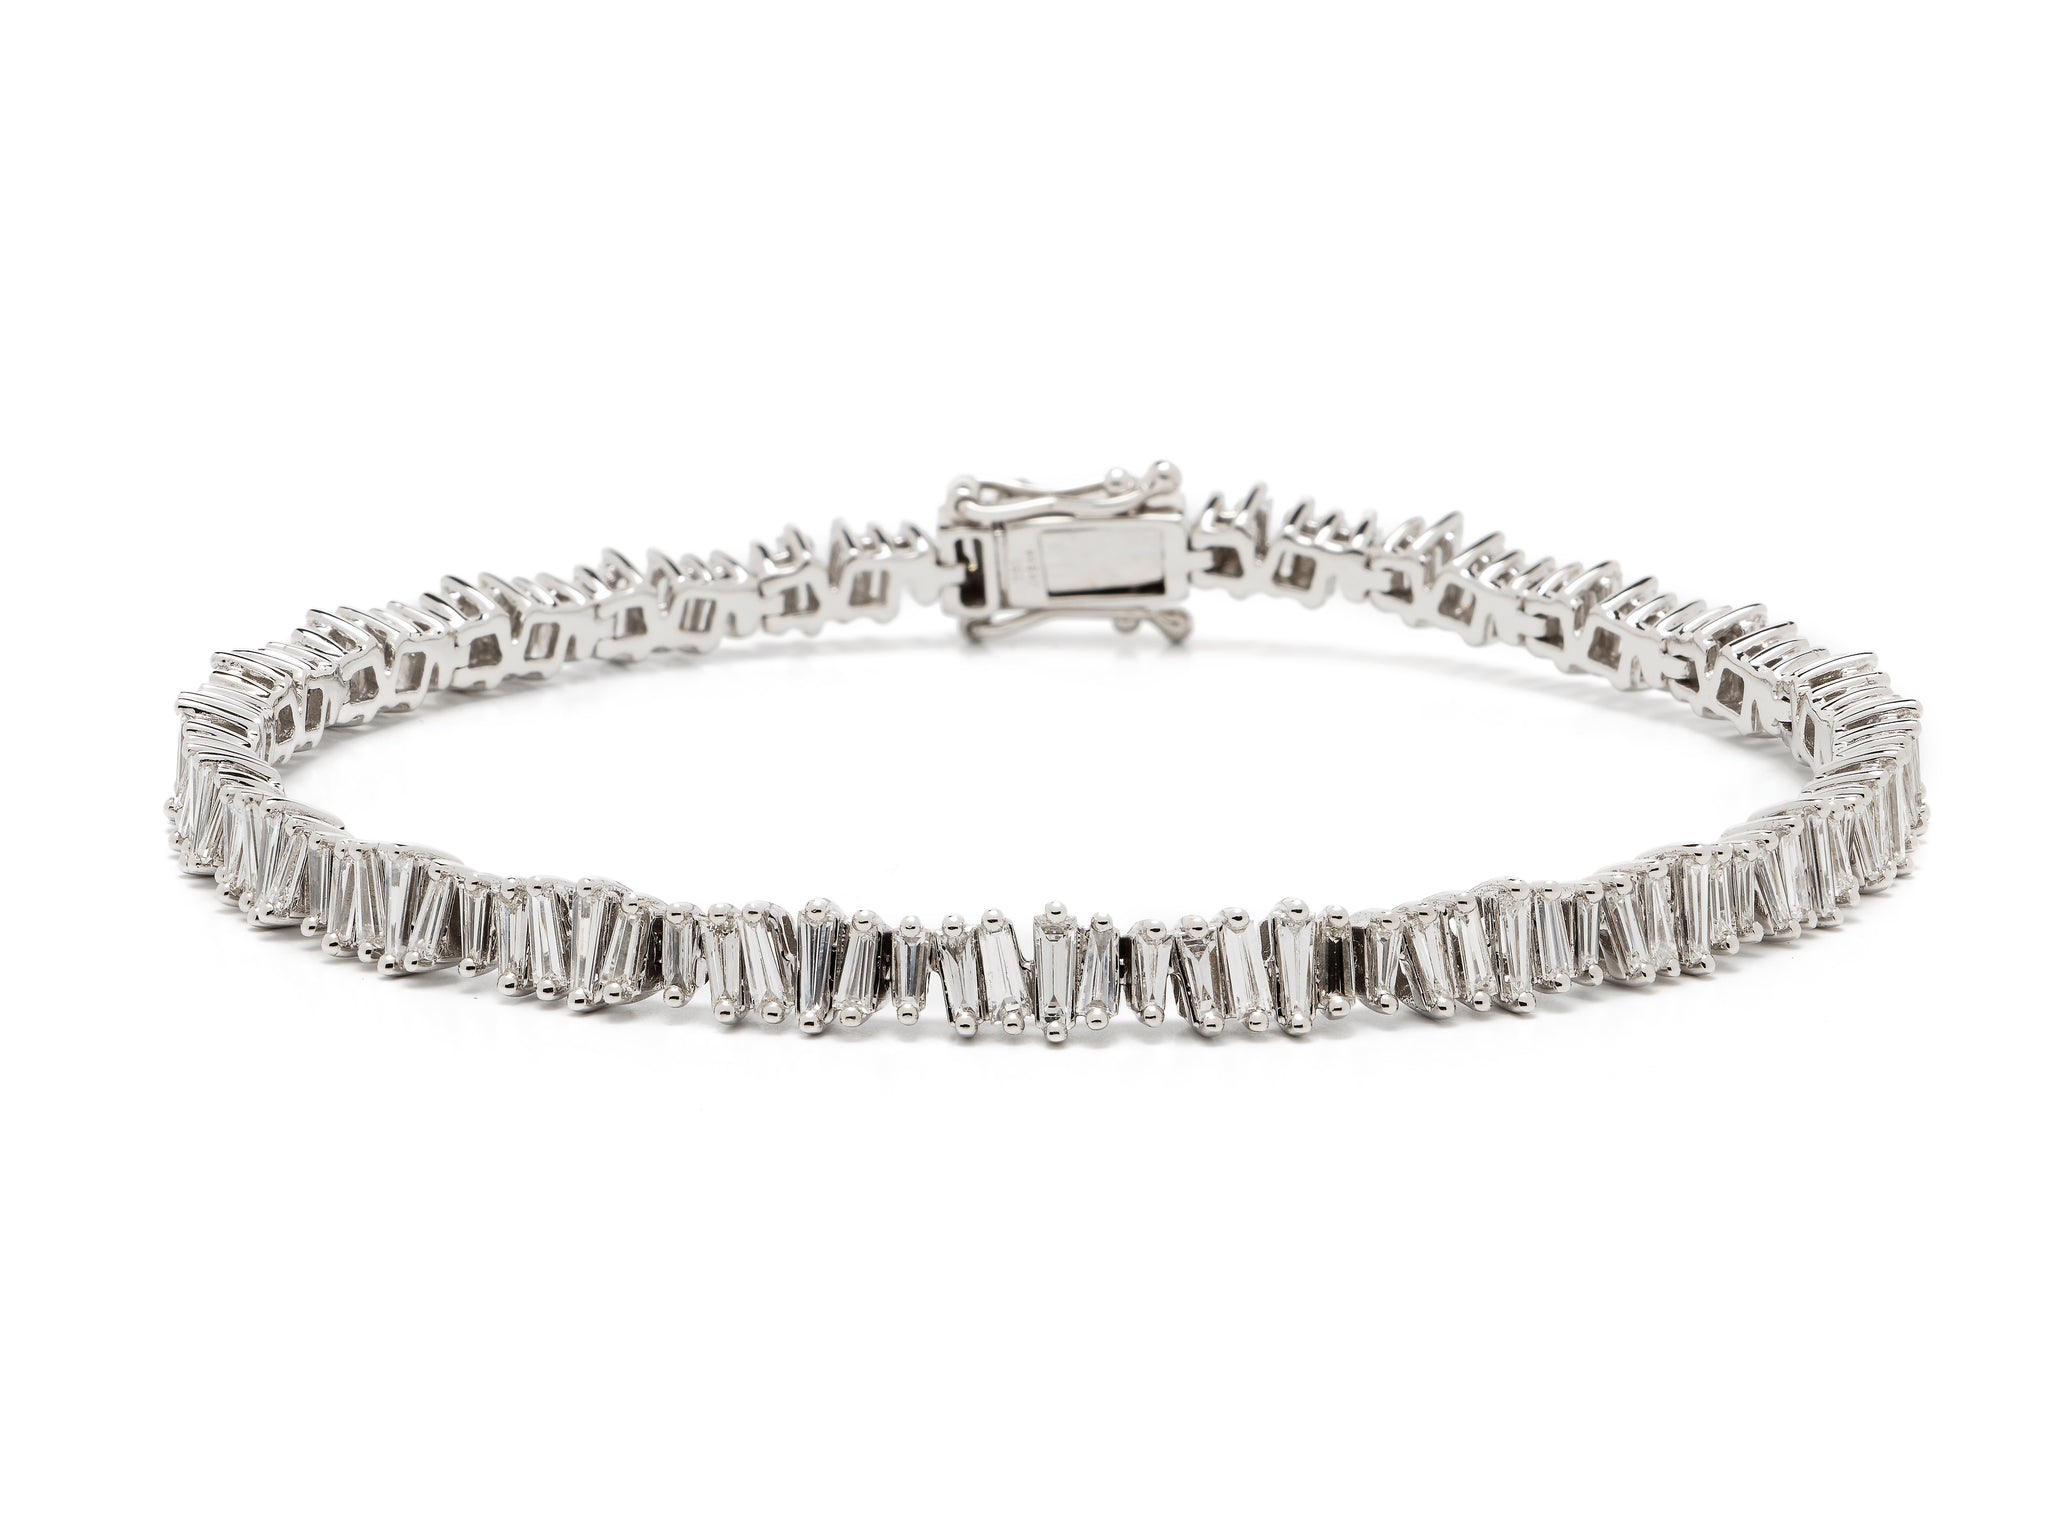 18 krt white gold bracelet set with 120 tapered diamonds